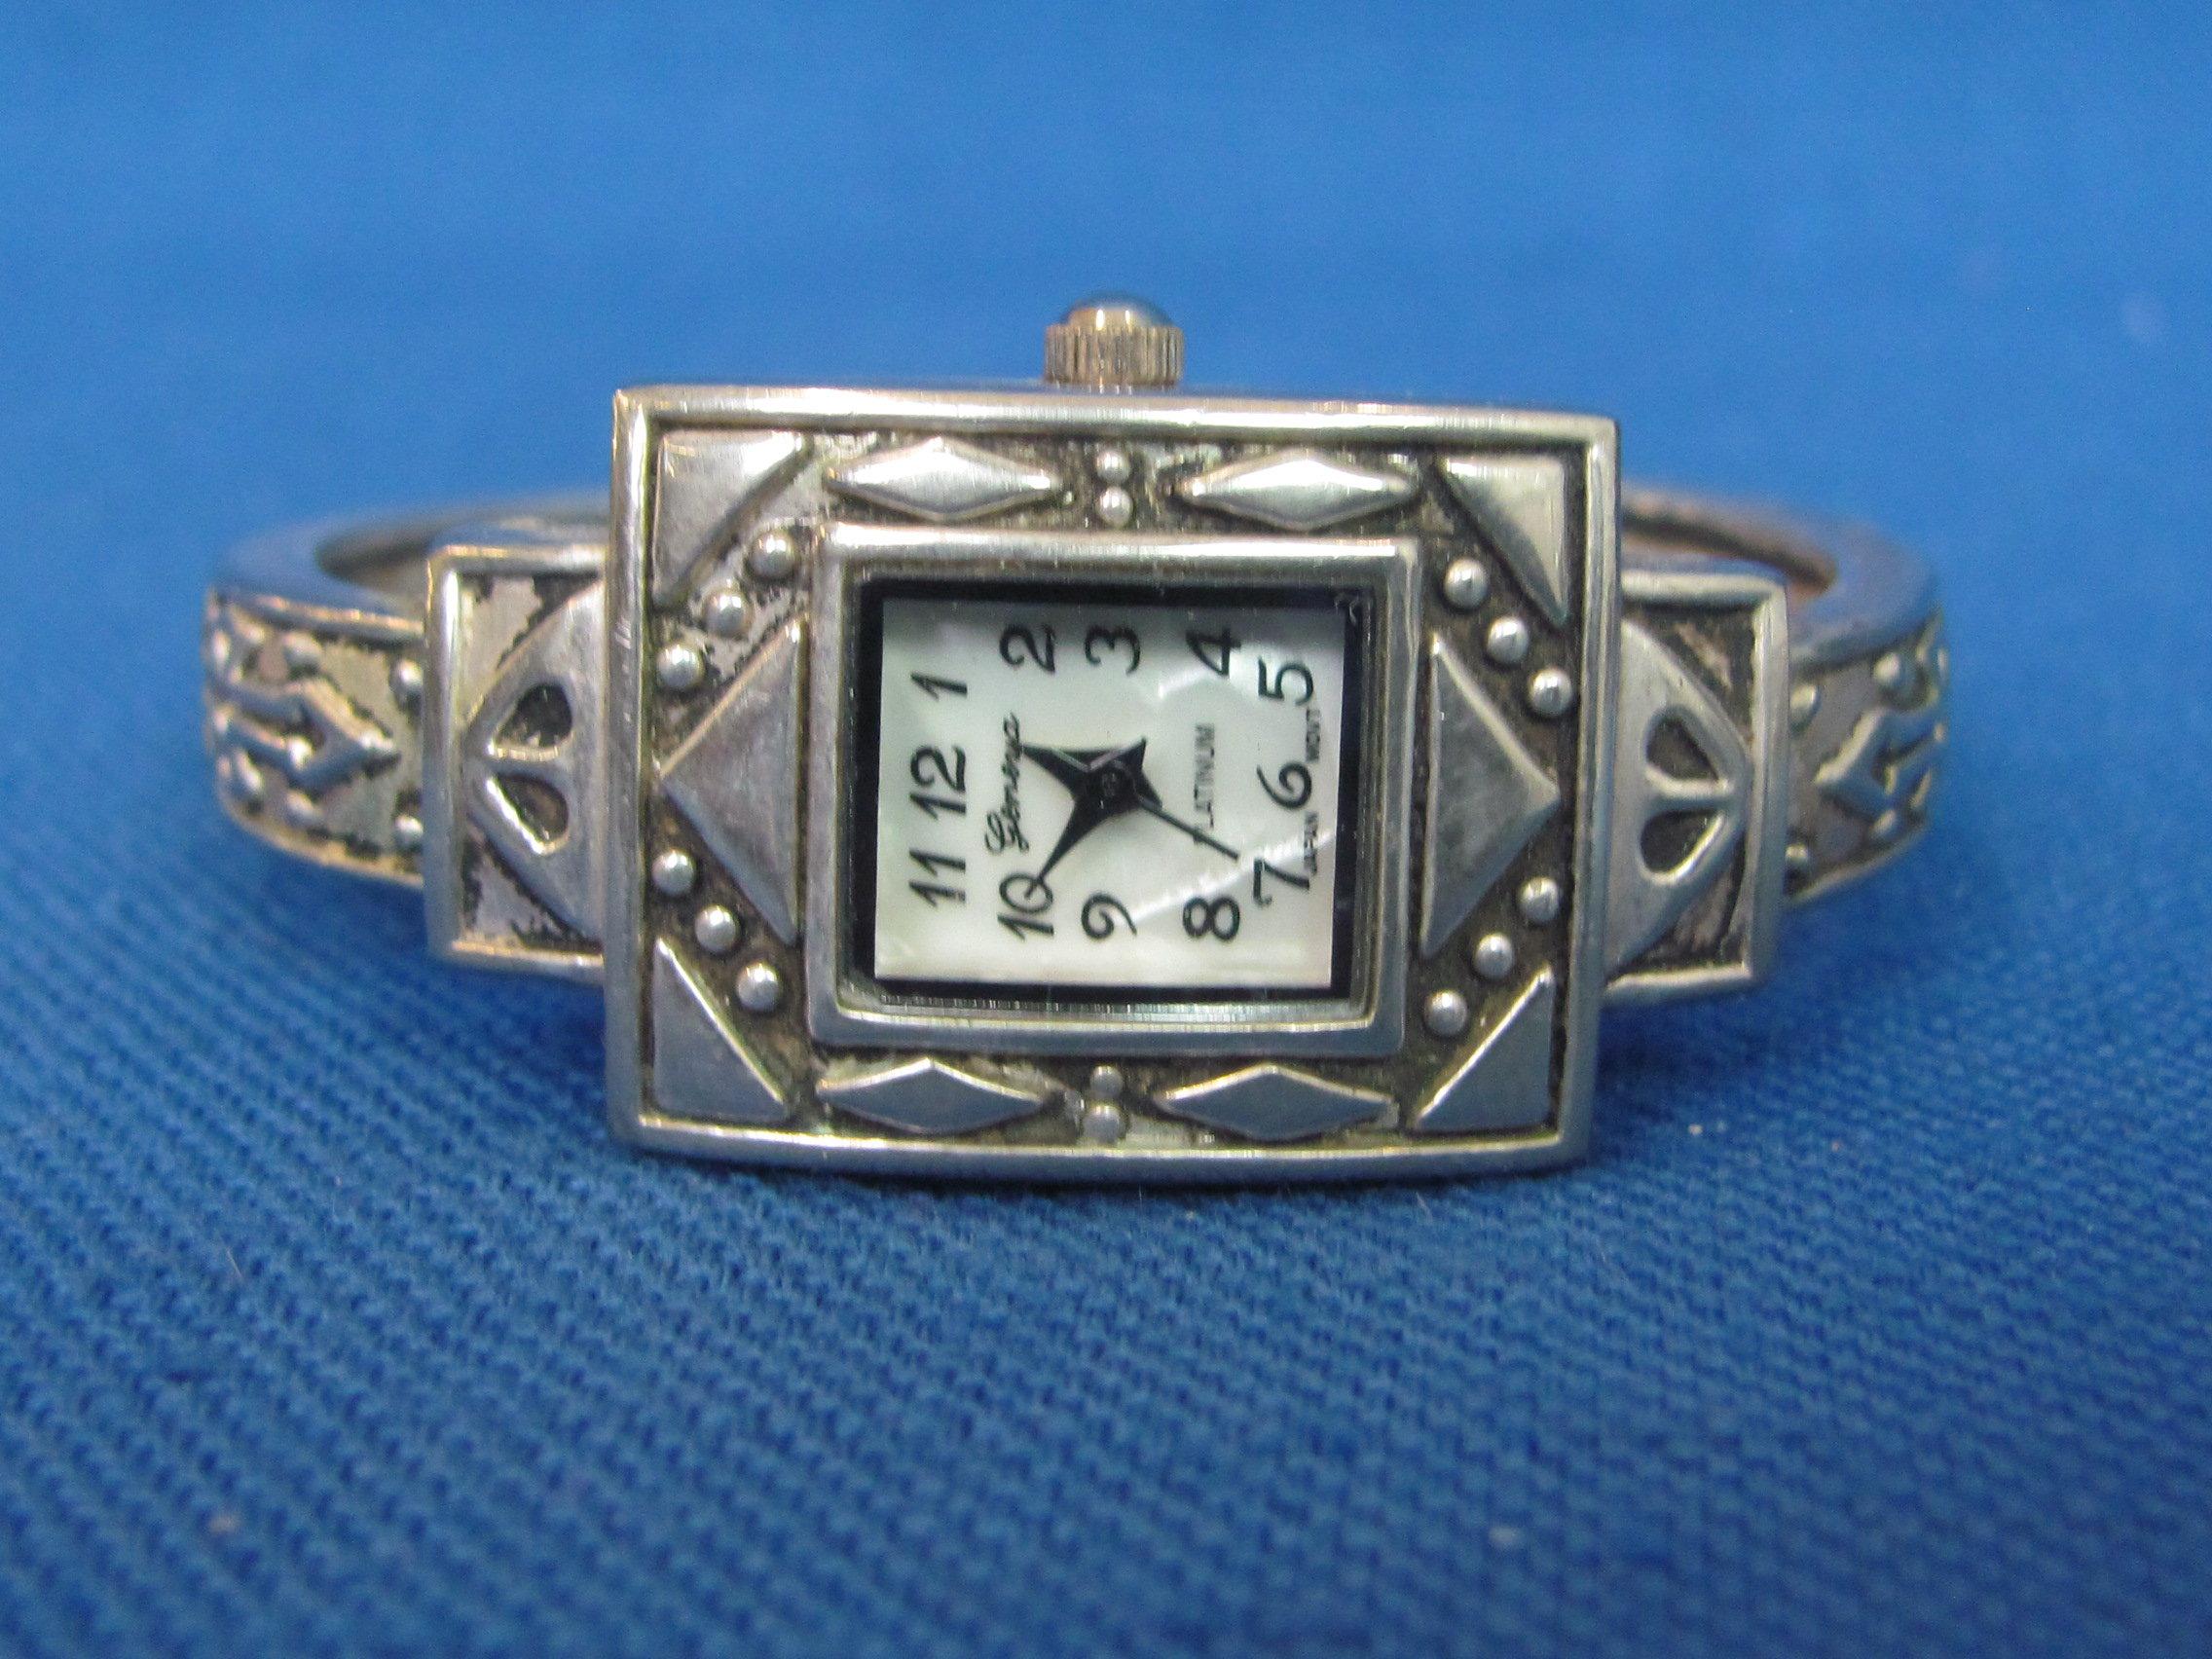 2 Geneva Clamp Bracelet Style Wristwatches – Both running – Silvertone